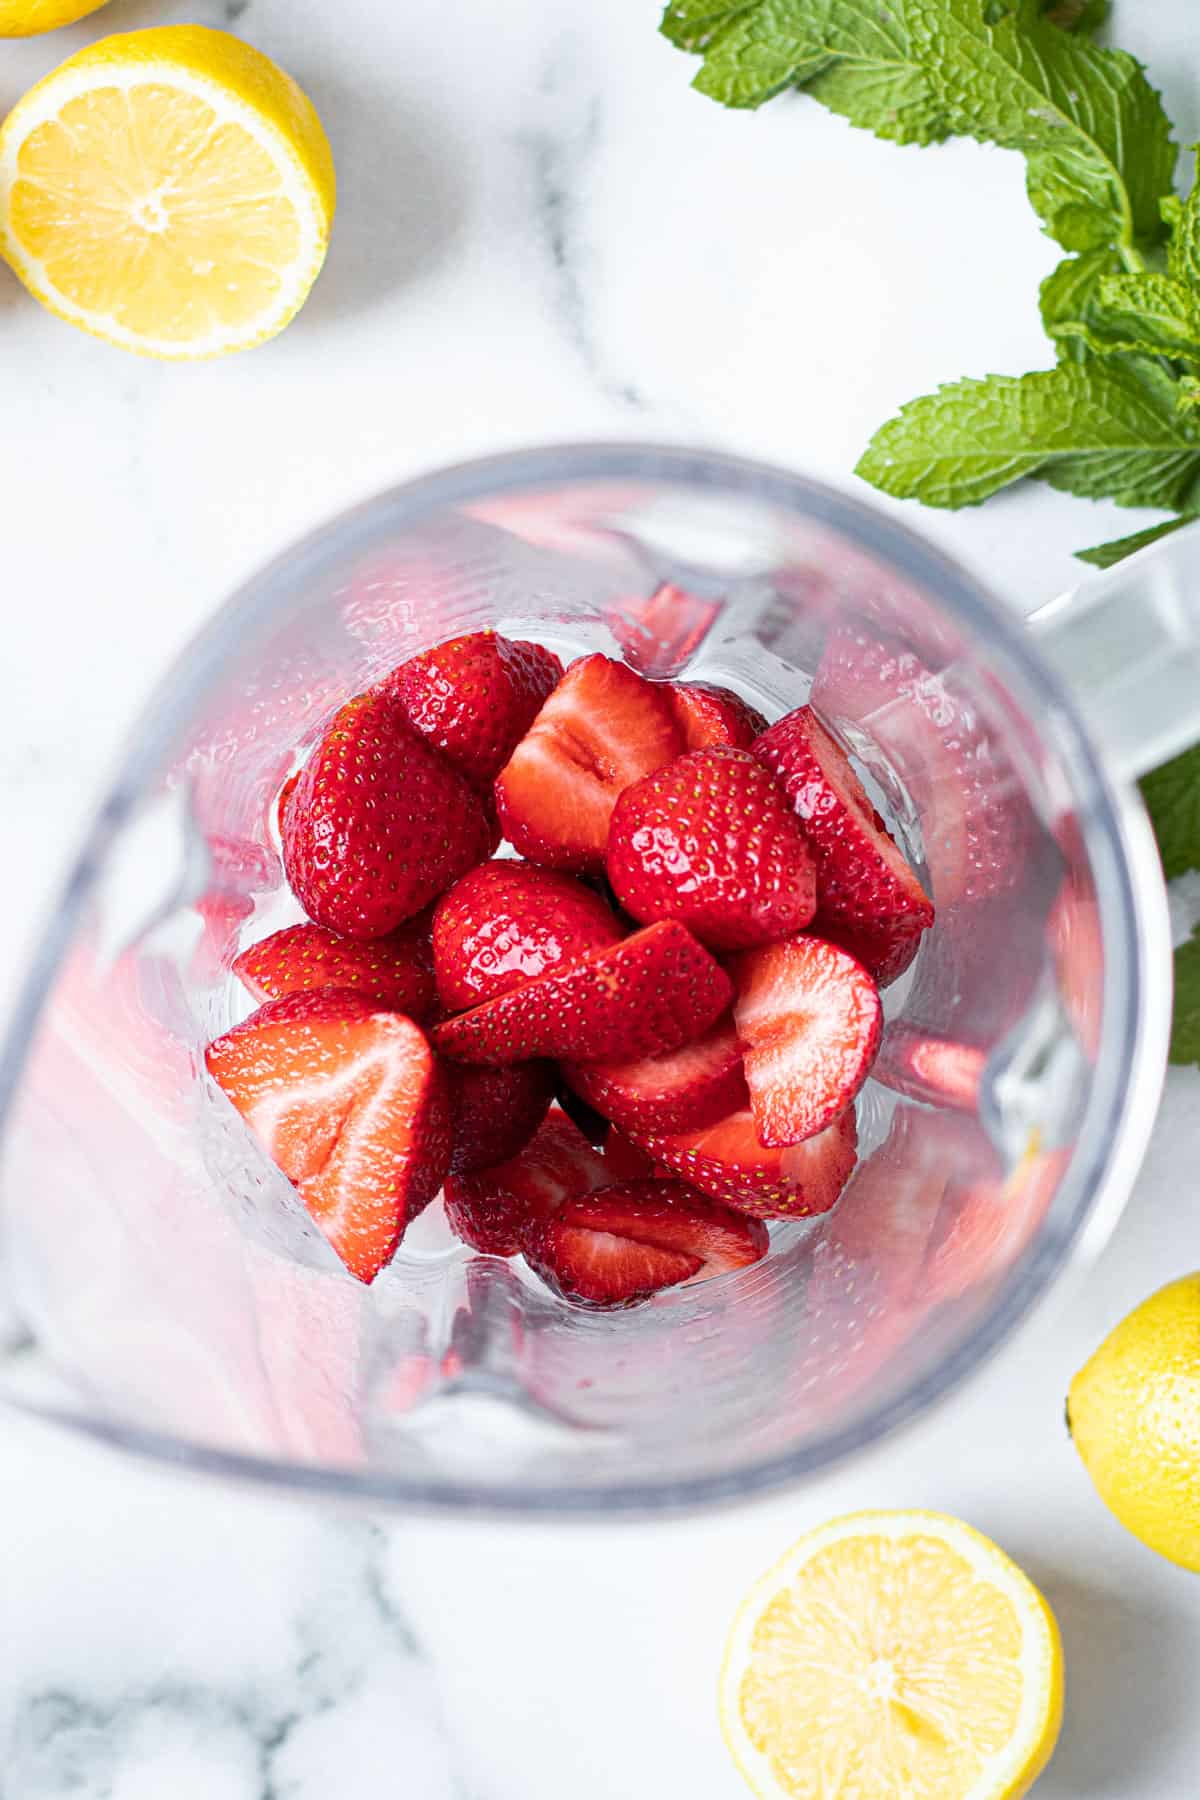 Strawberries in a blender to make strawberry lemonade.